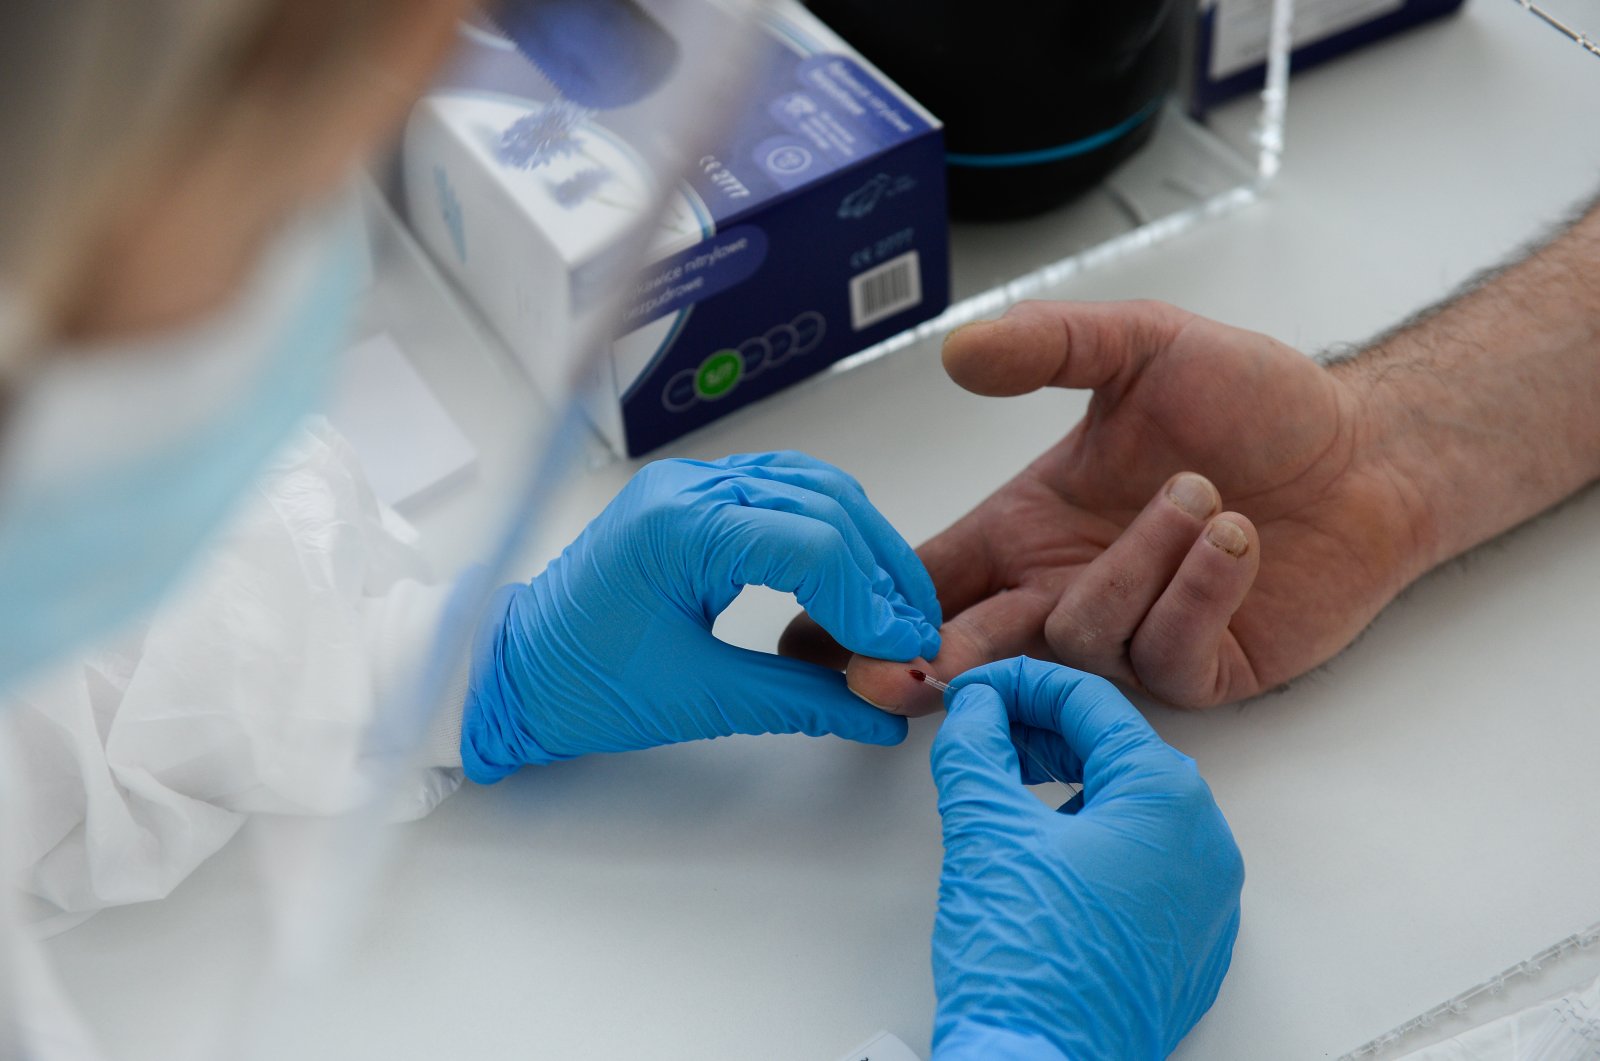 A medical staff member administers a coronavirus antibody test at Dworska hospital in Krakow, Poland, April 16, 2020. (AA Photo)